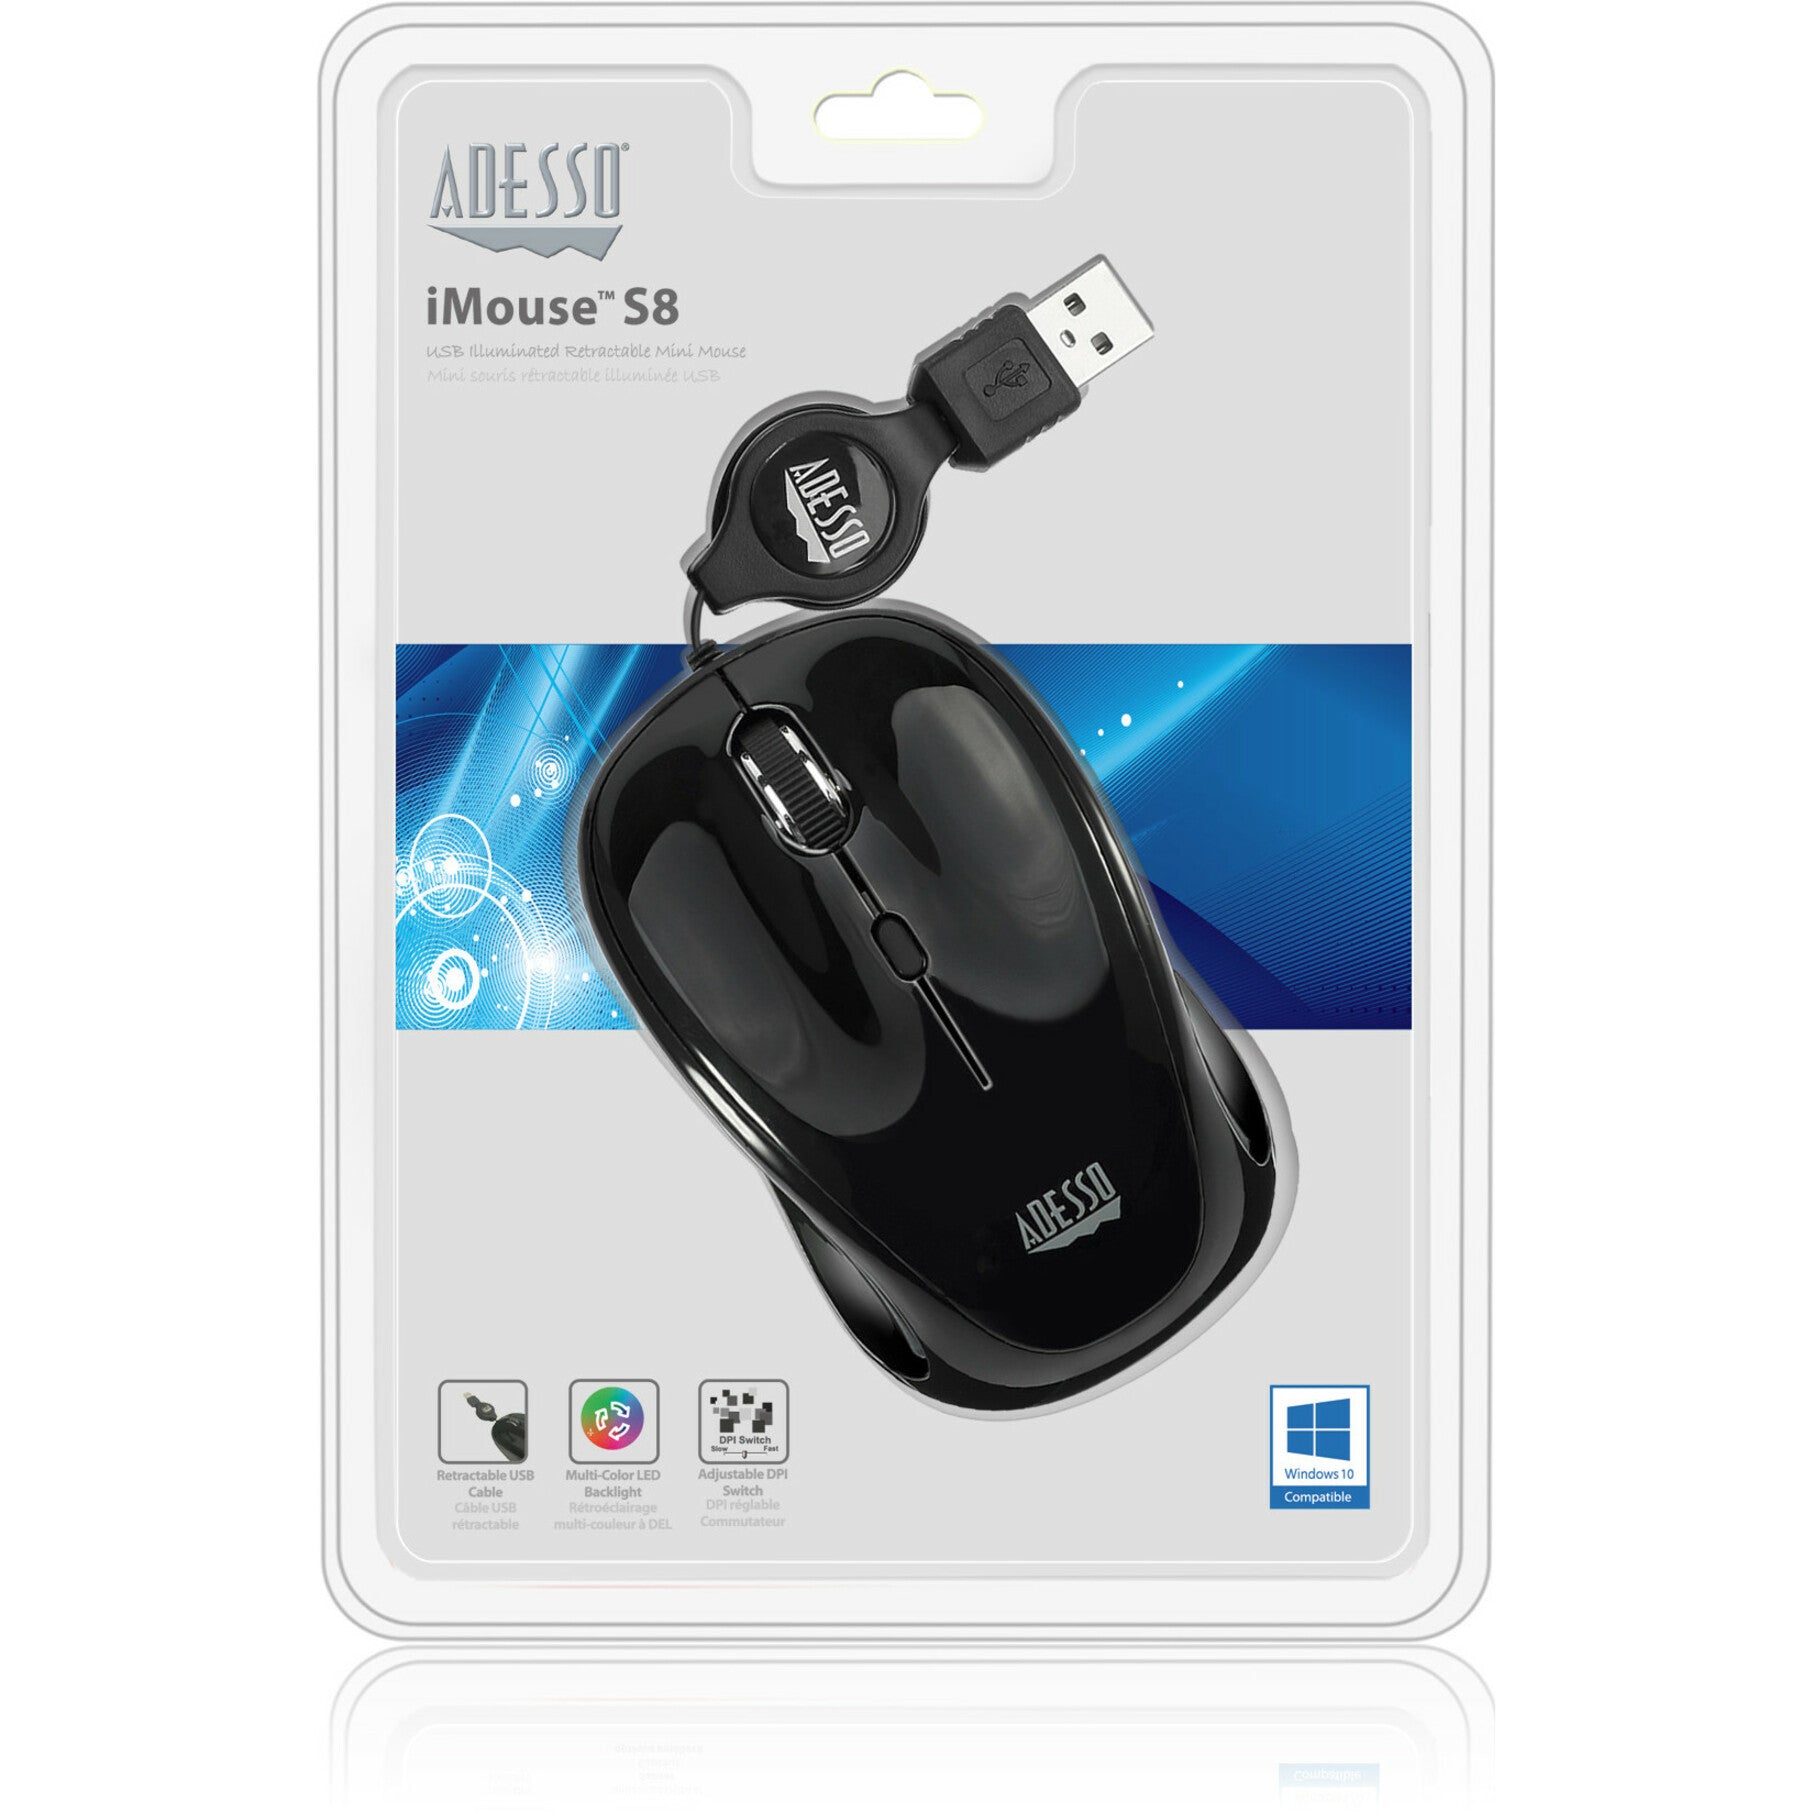 Adesso IMOUSE S8B USB Illuminated Retractable Mini Mouse, Ergonomic Fit, 1600 DPI, Symmetrical Design